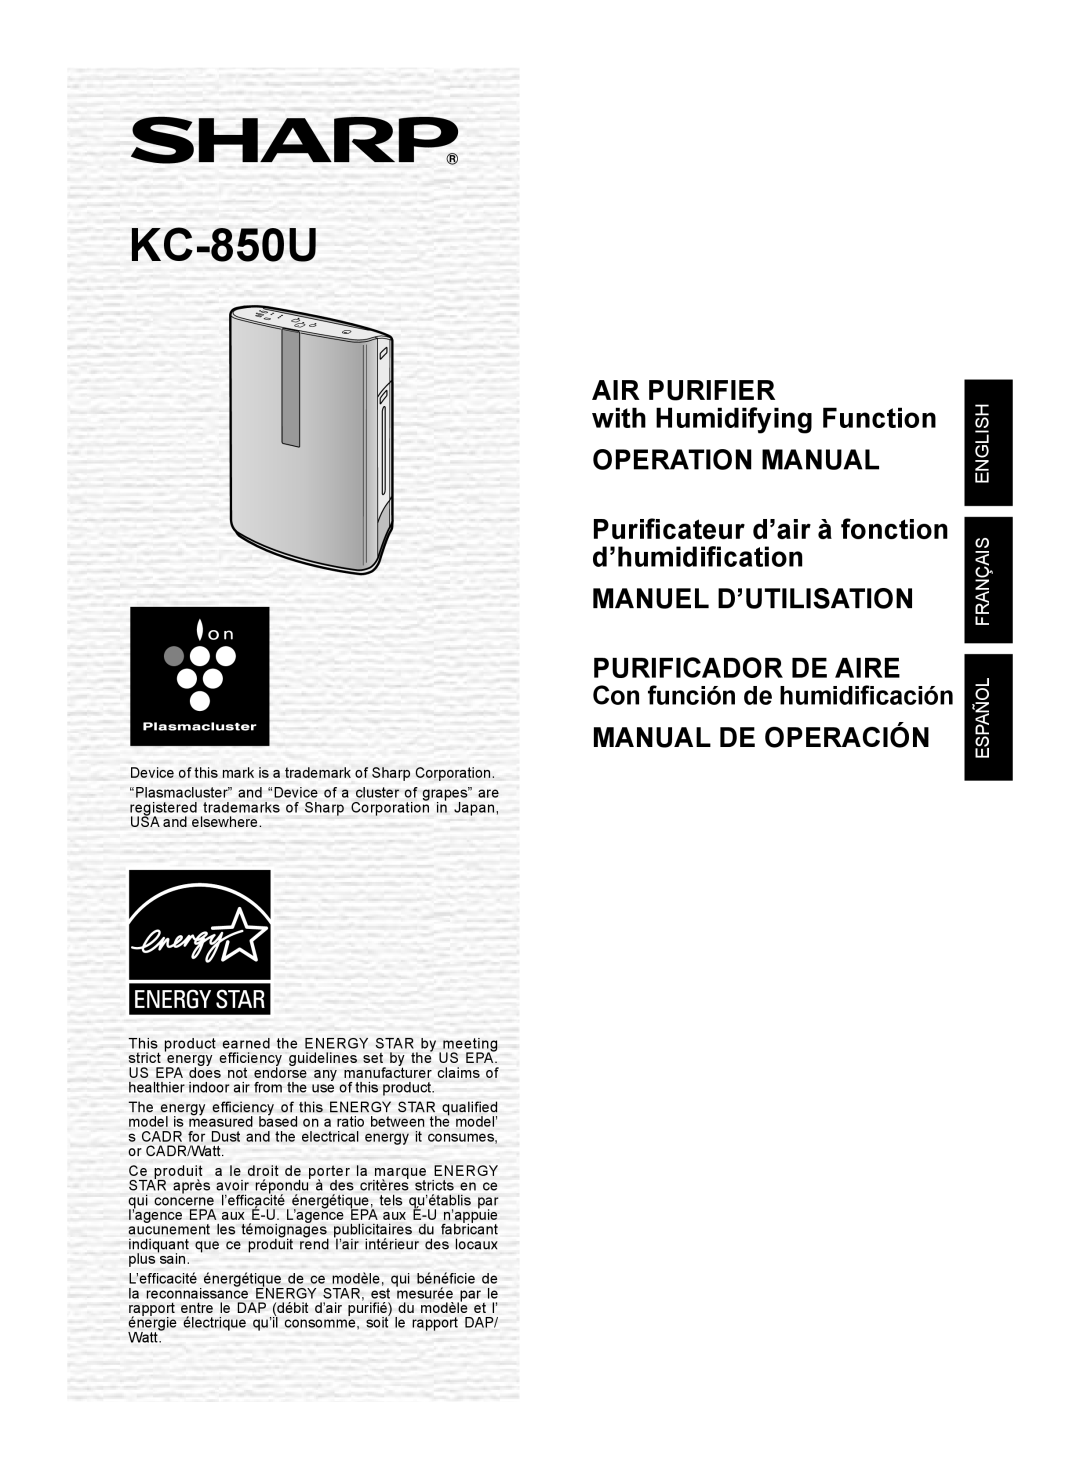 Sharp KC-850U operation manual AIR PURIFIER with Humidifying Function, Purificateur d’air à fonction d’humidification 